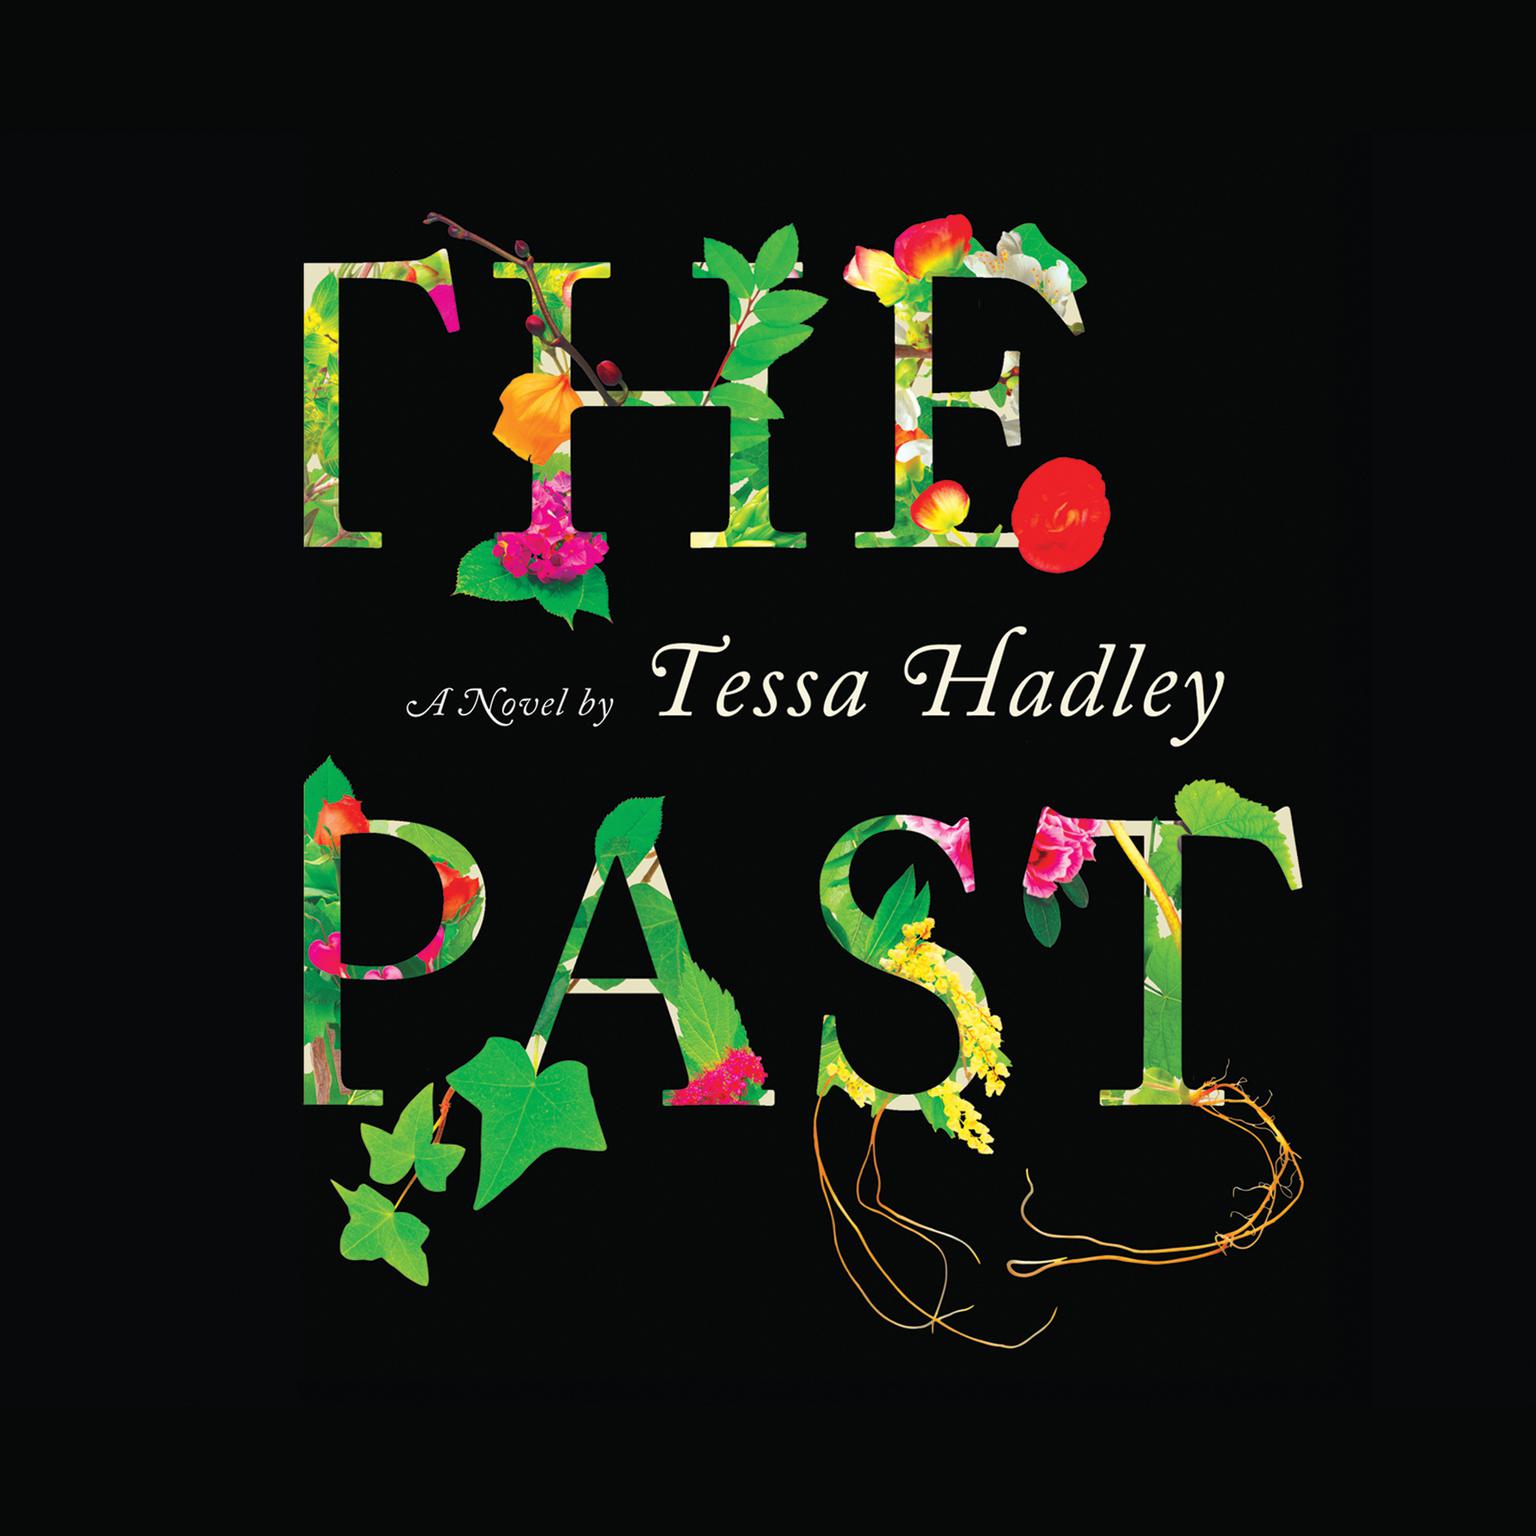 The Past: A Novel Audiobook, by Tessa Hadley